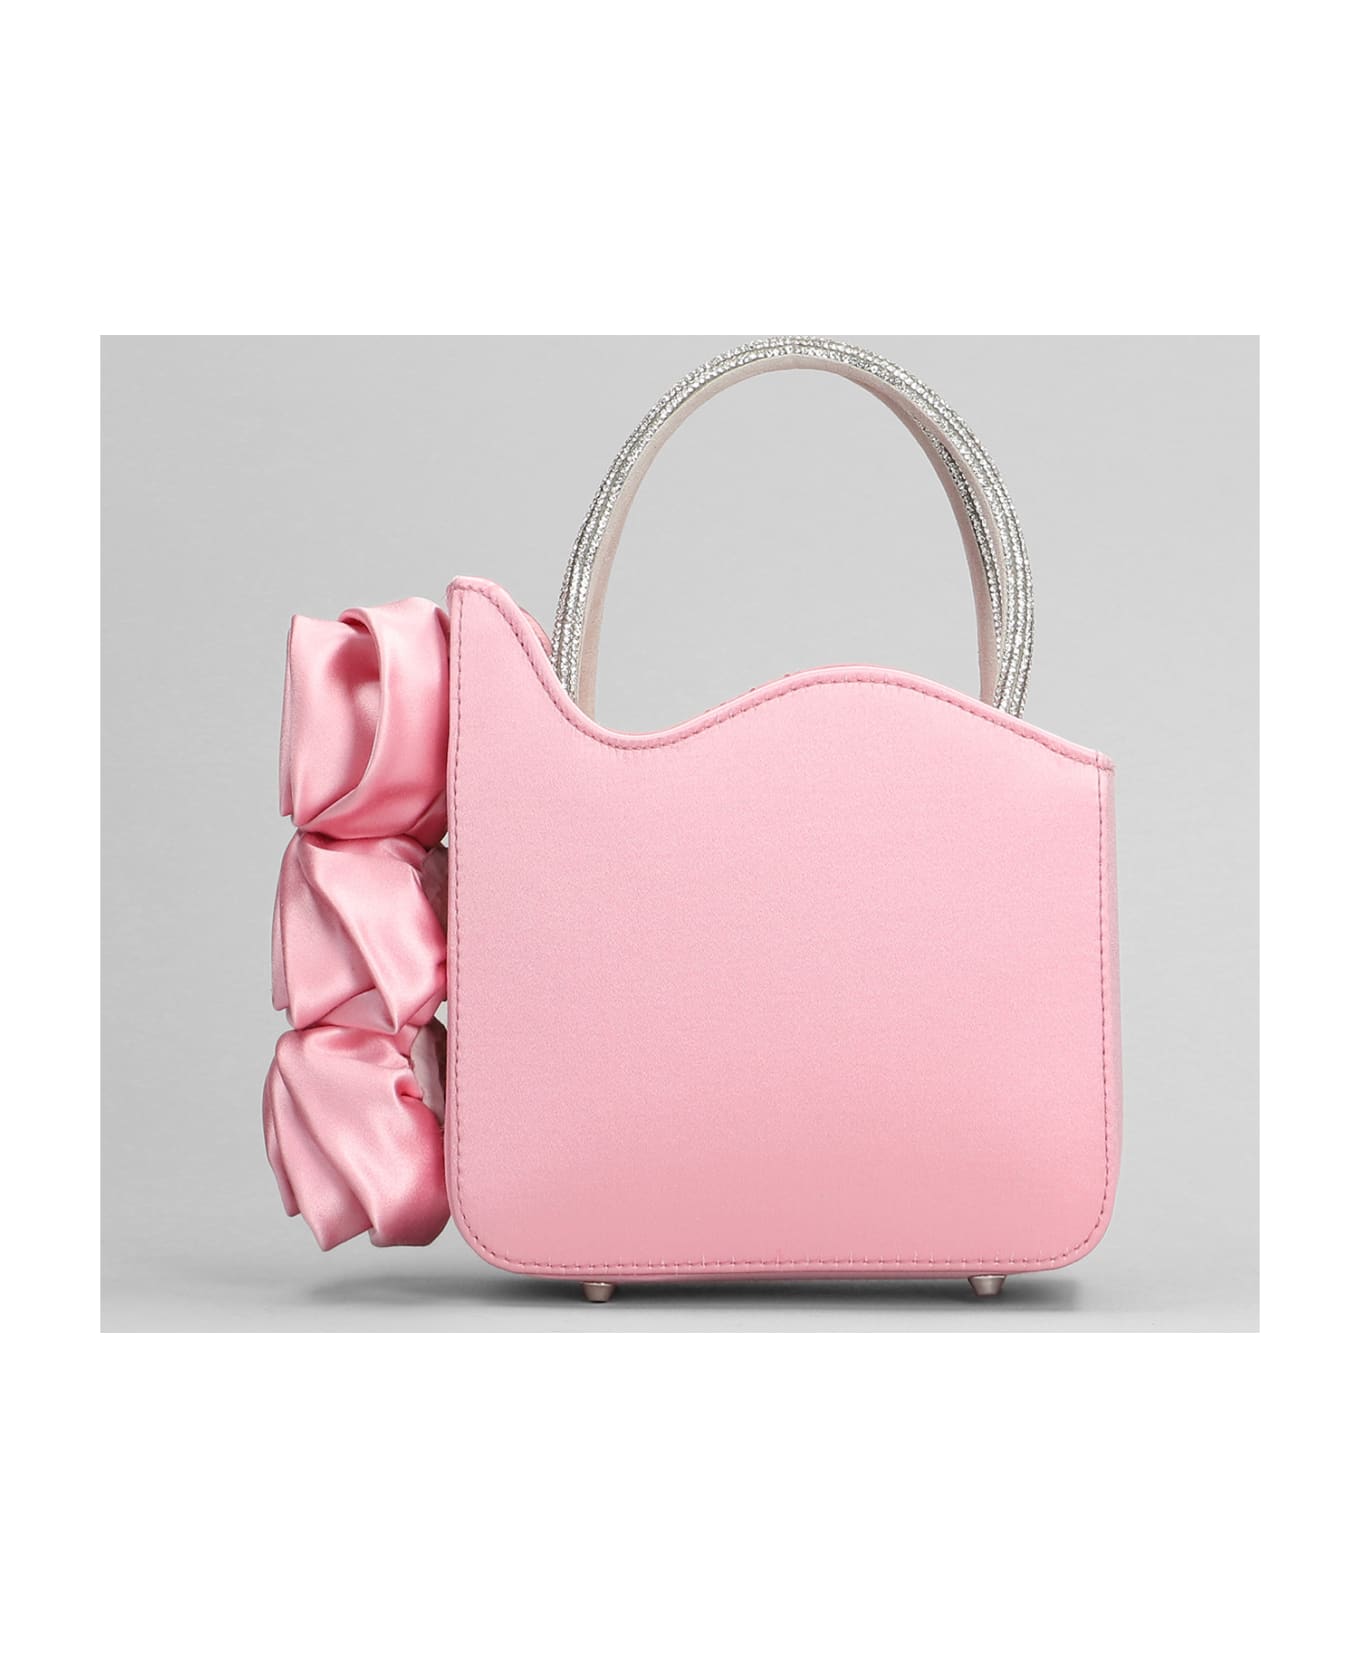 Le Silla Rose Hand Bag In Rose-pink Satin - rose-pink トートバッグ